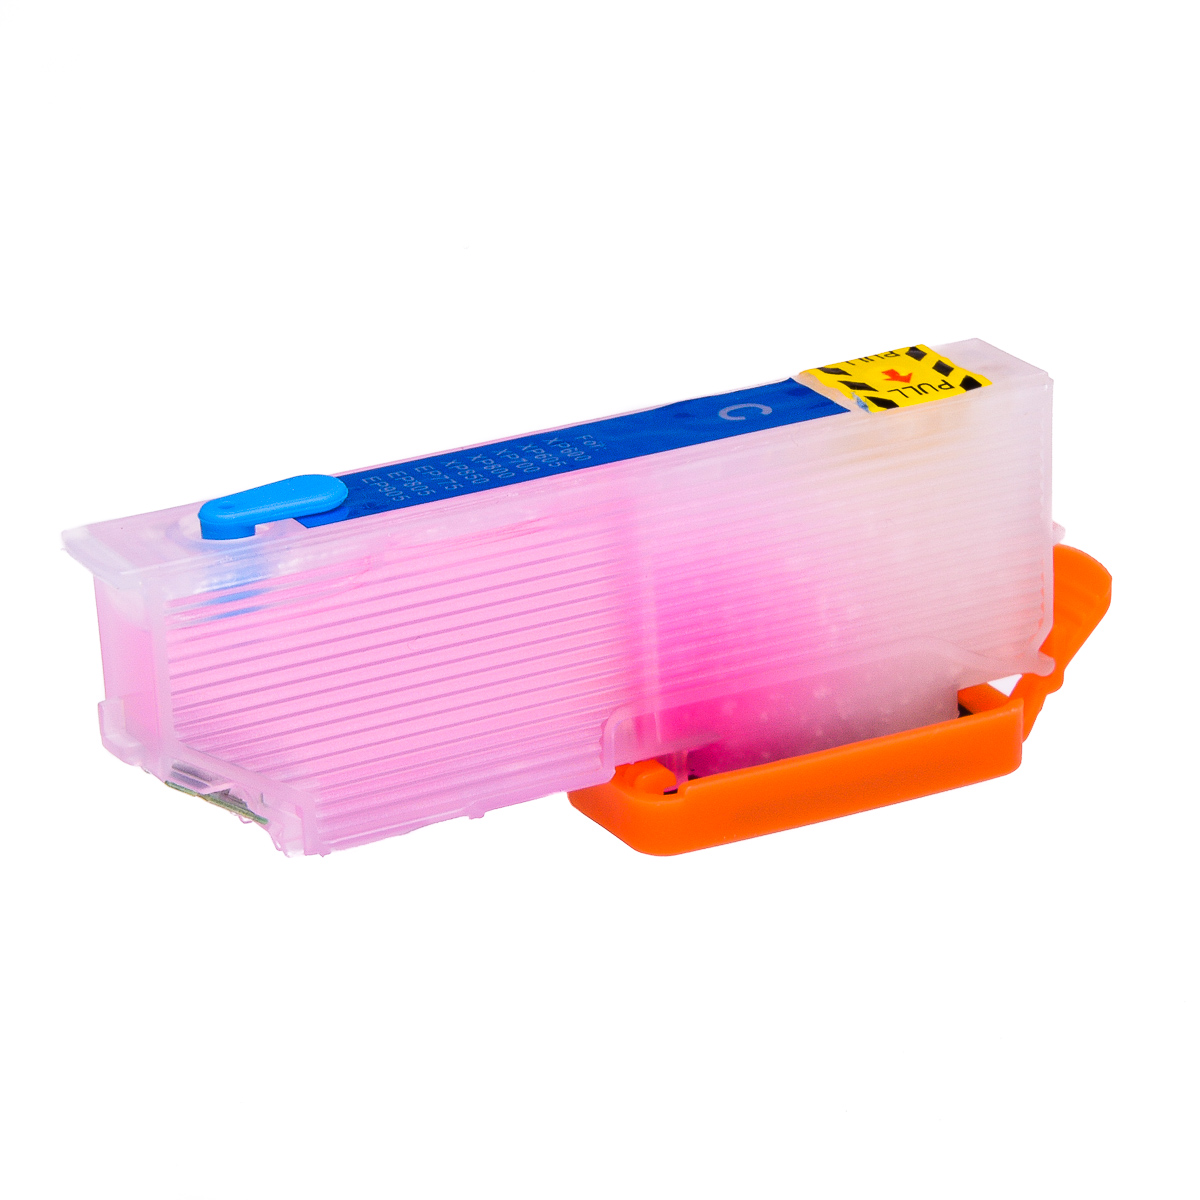 Cyan printhead cleaning cartridge for Epson XP-6000 printer